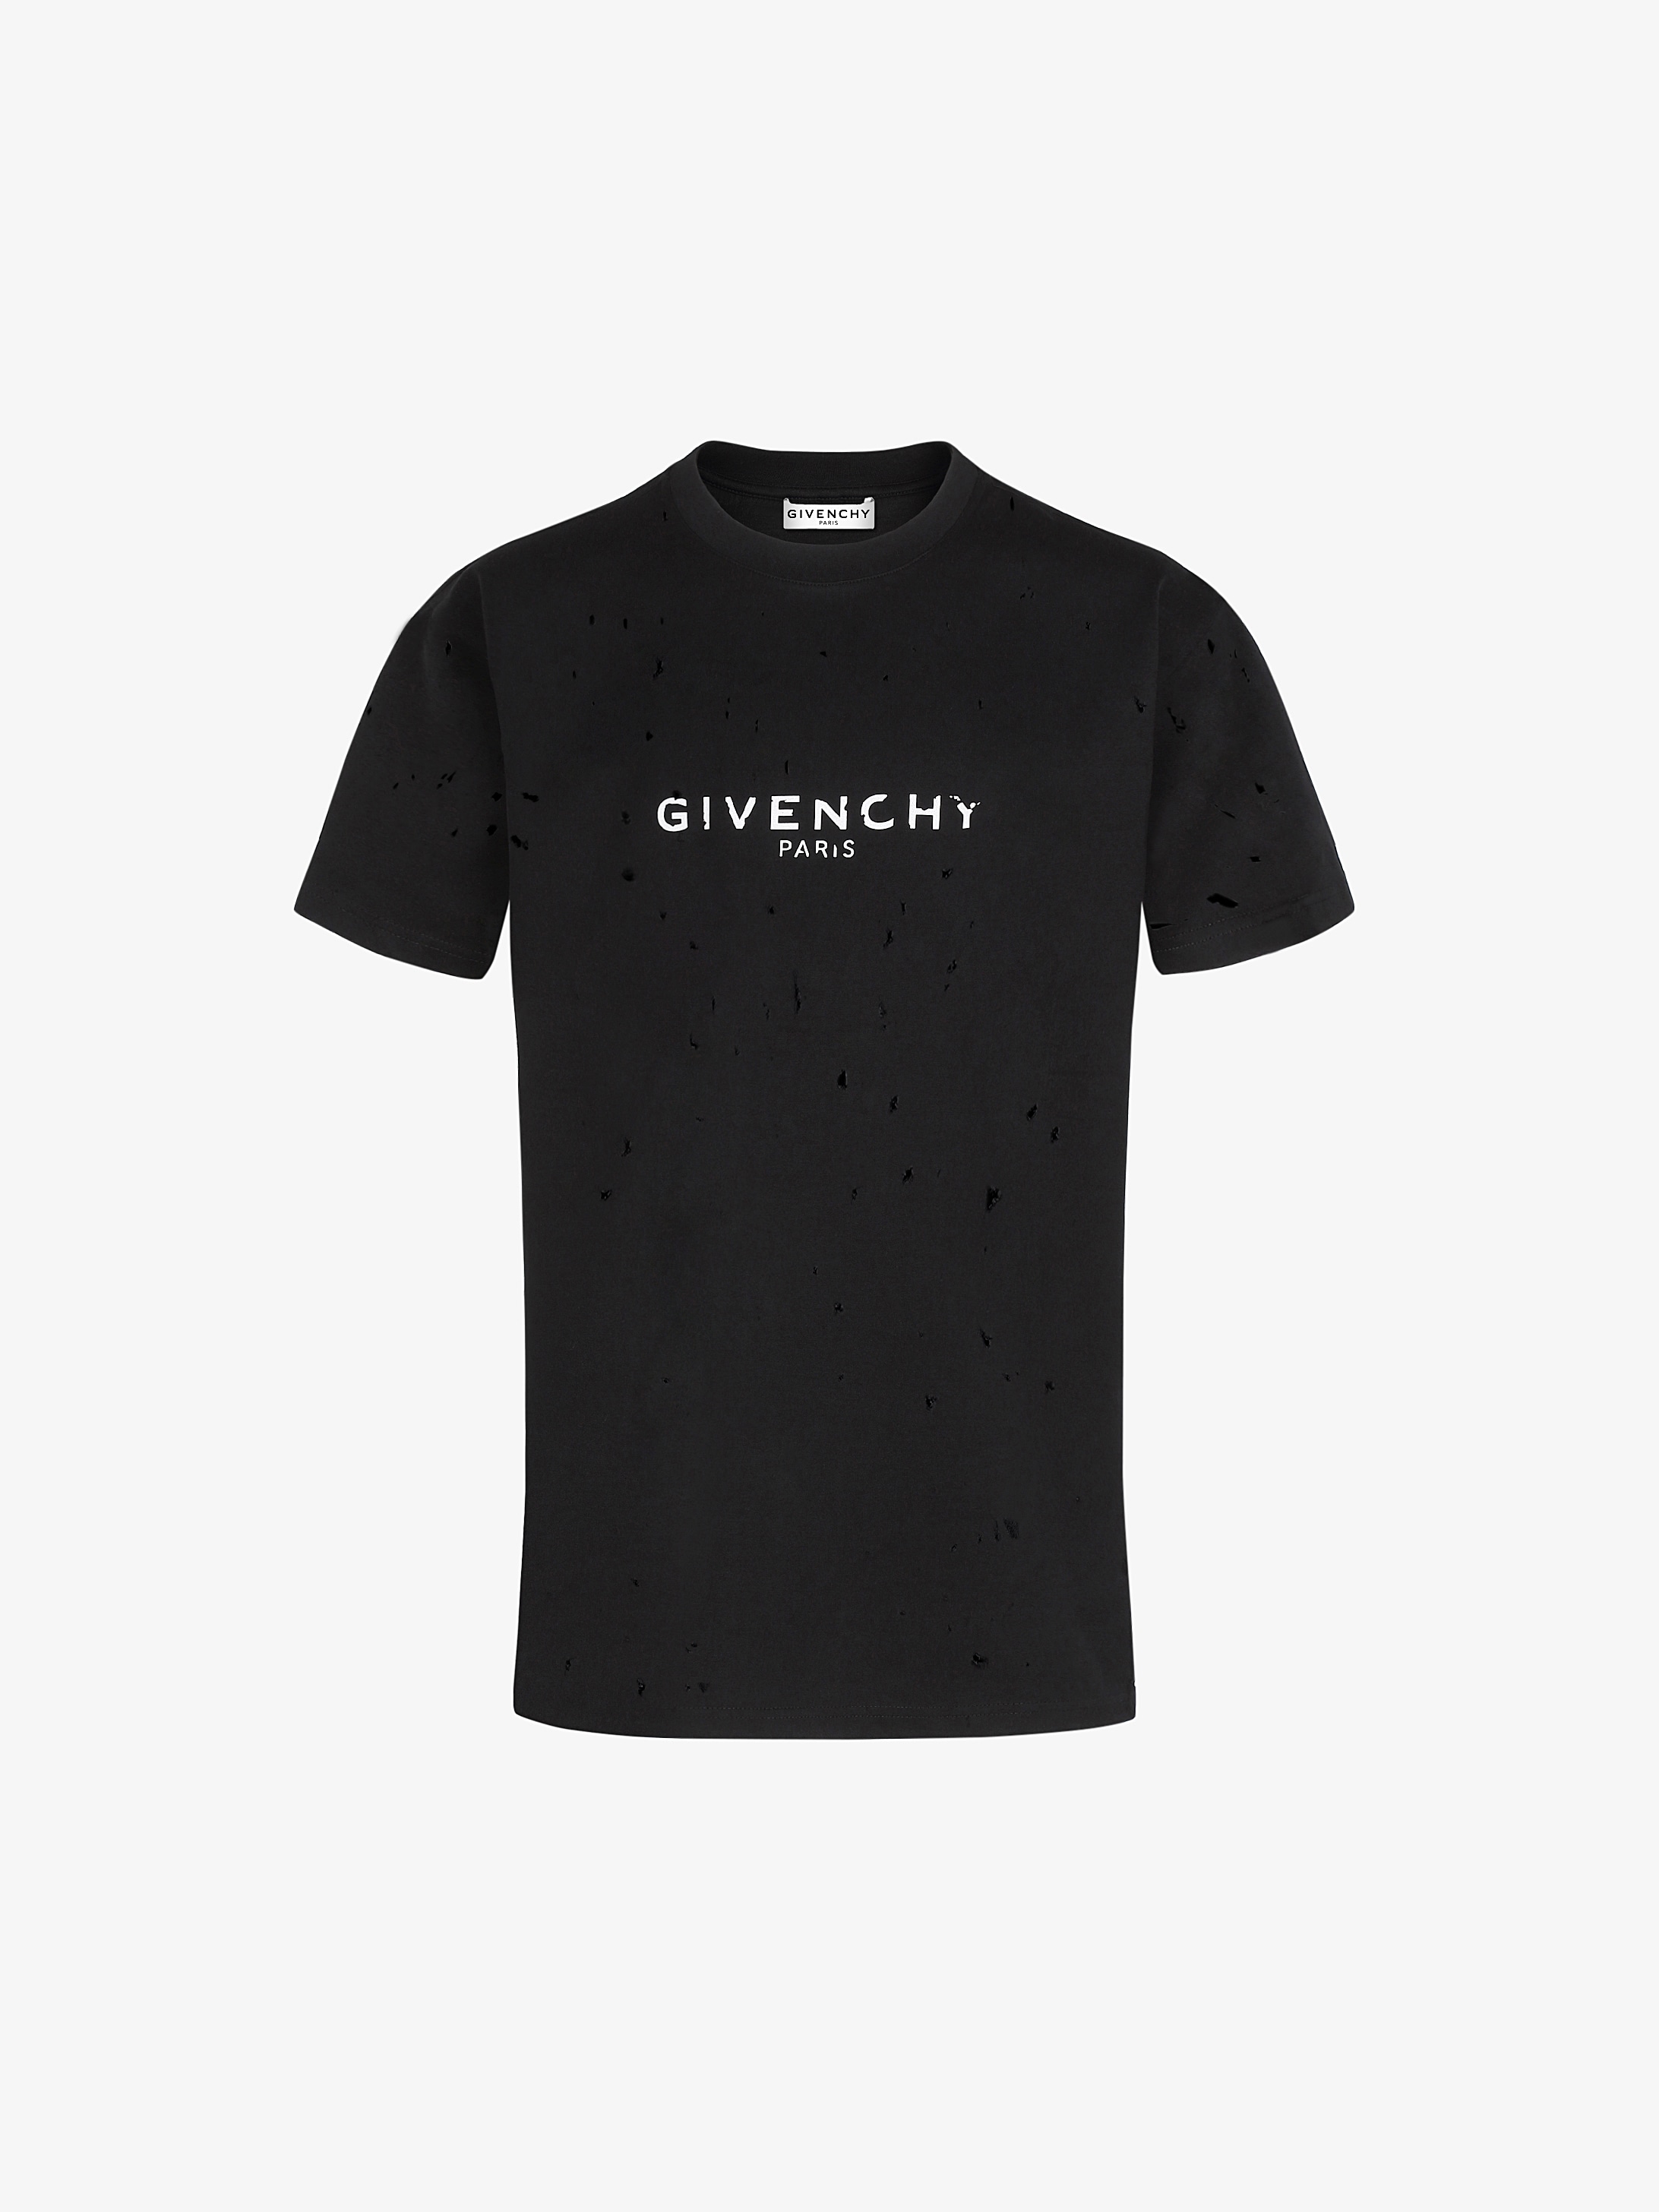 Givenchy PARIS destroyed t-shirt 